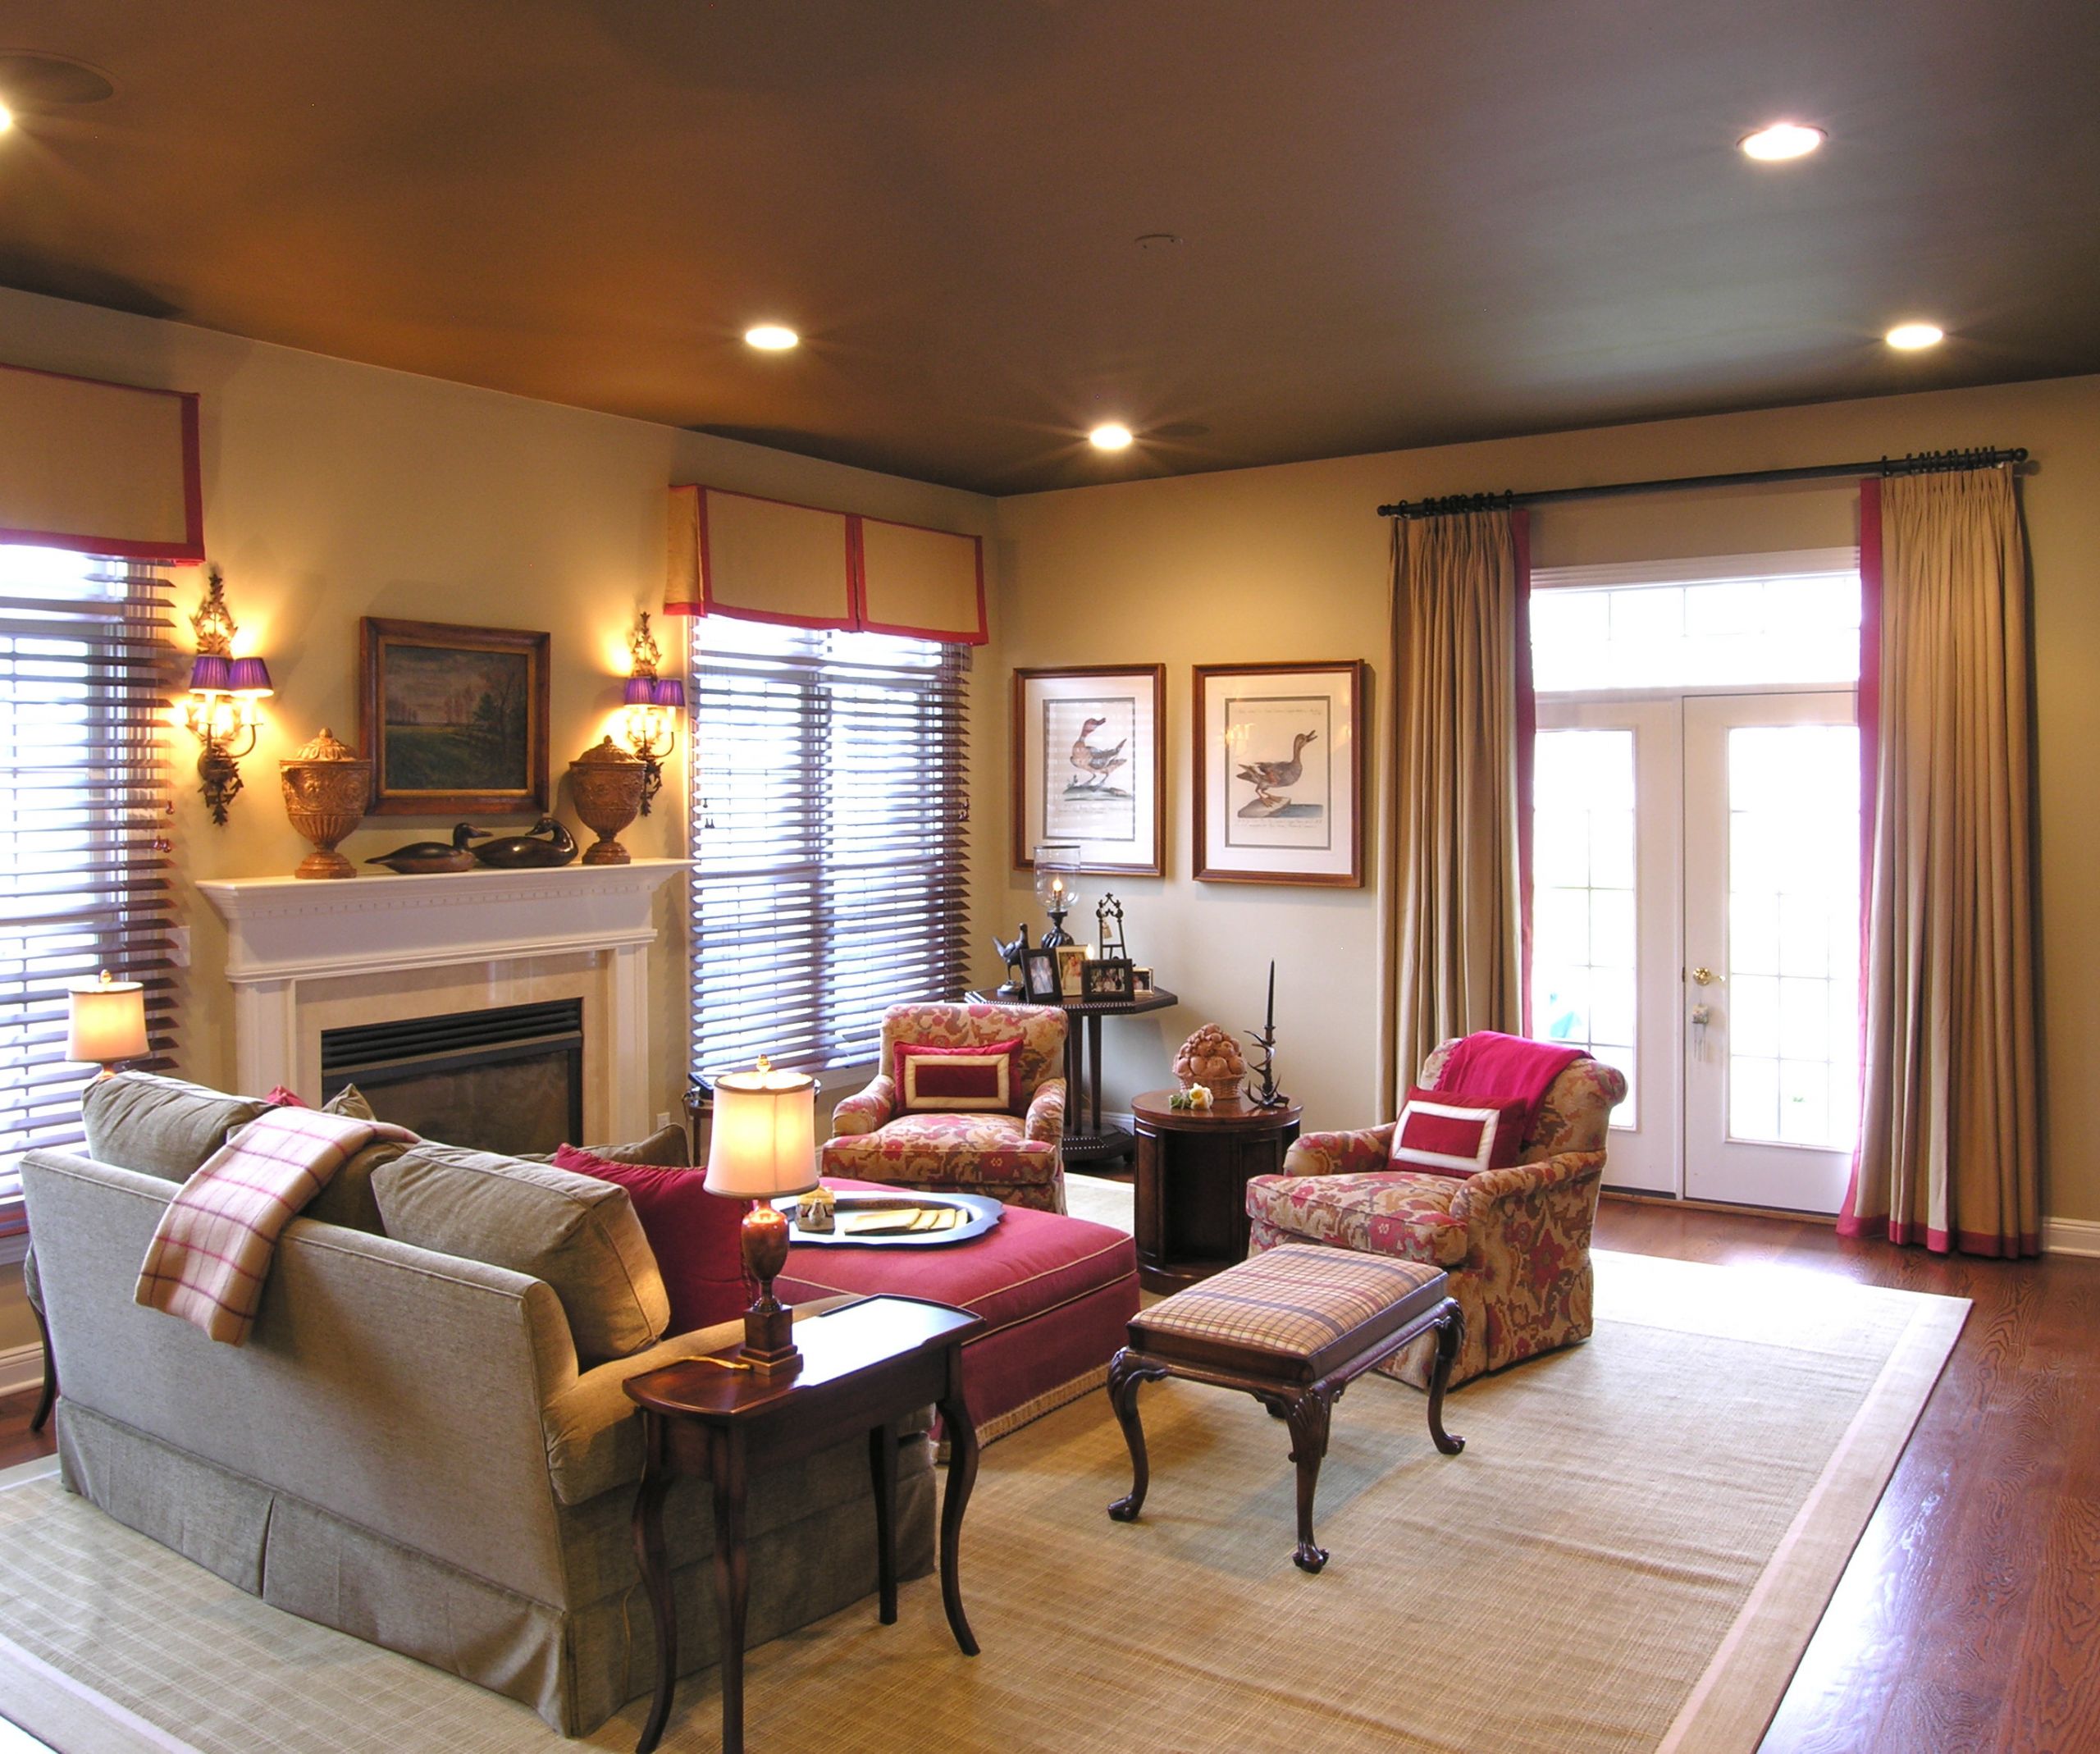 Paint Scheme For Living Room
 Warm Living Room Paint Colors